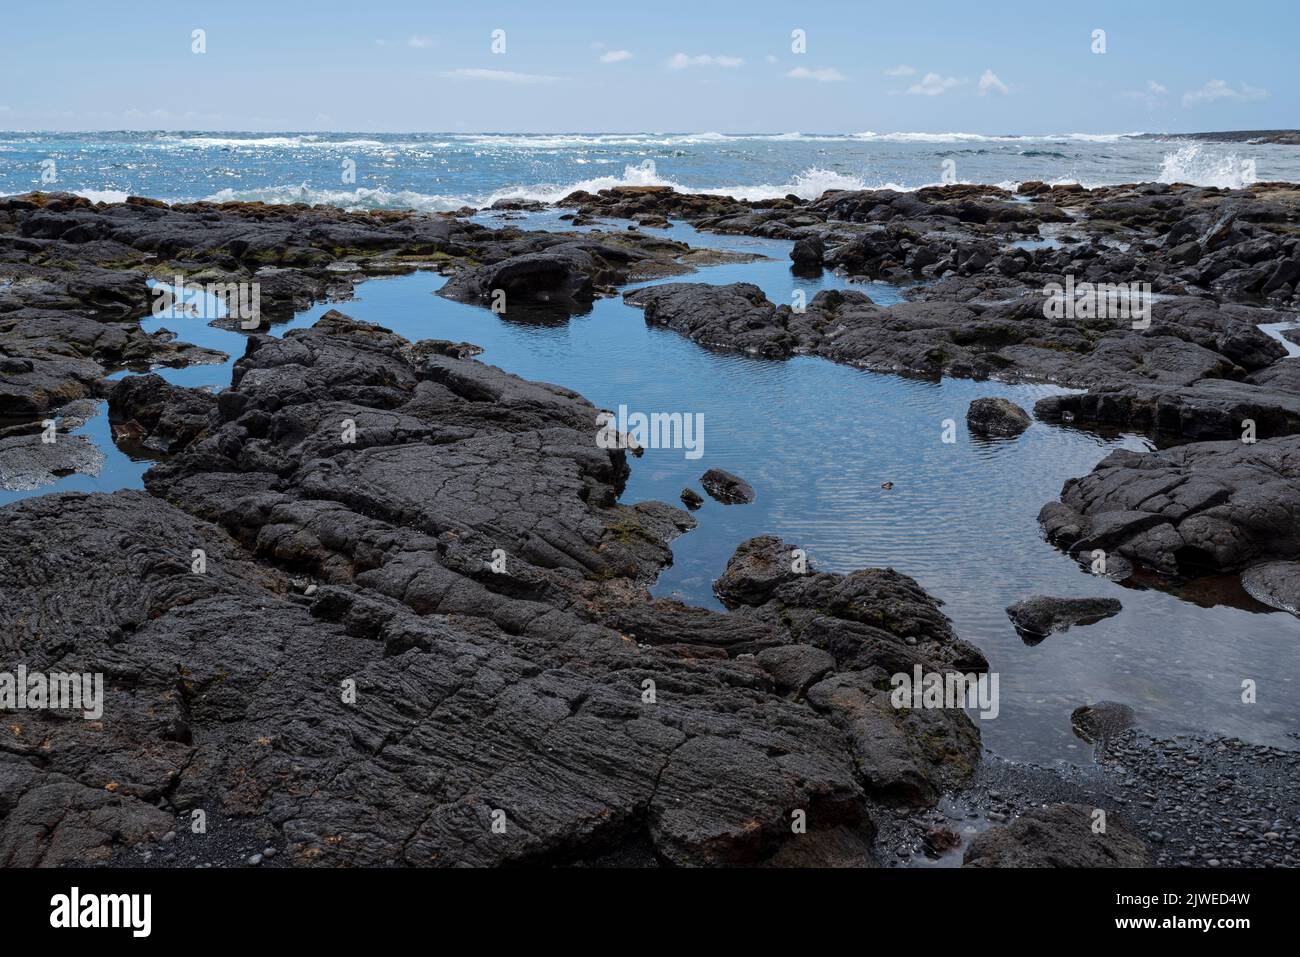 rocky punalu'u shore and ocean on horizon along kau coast of southeastern hawaii Stock Photo